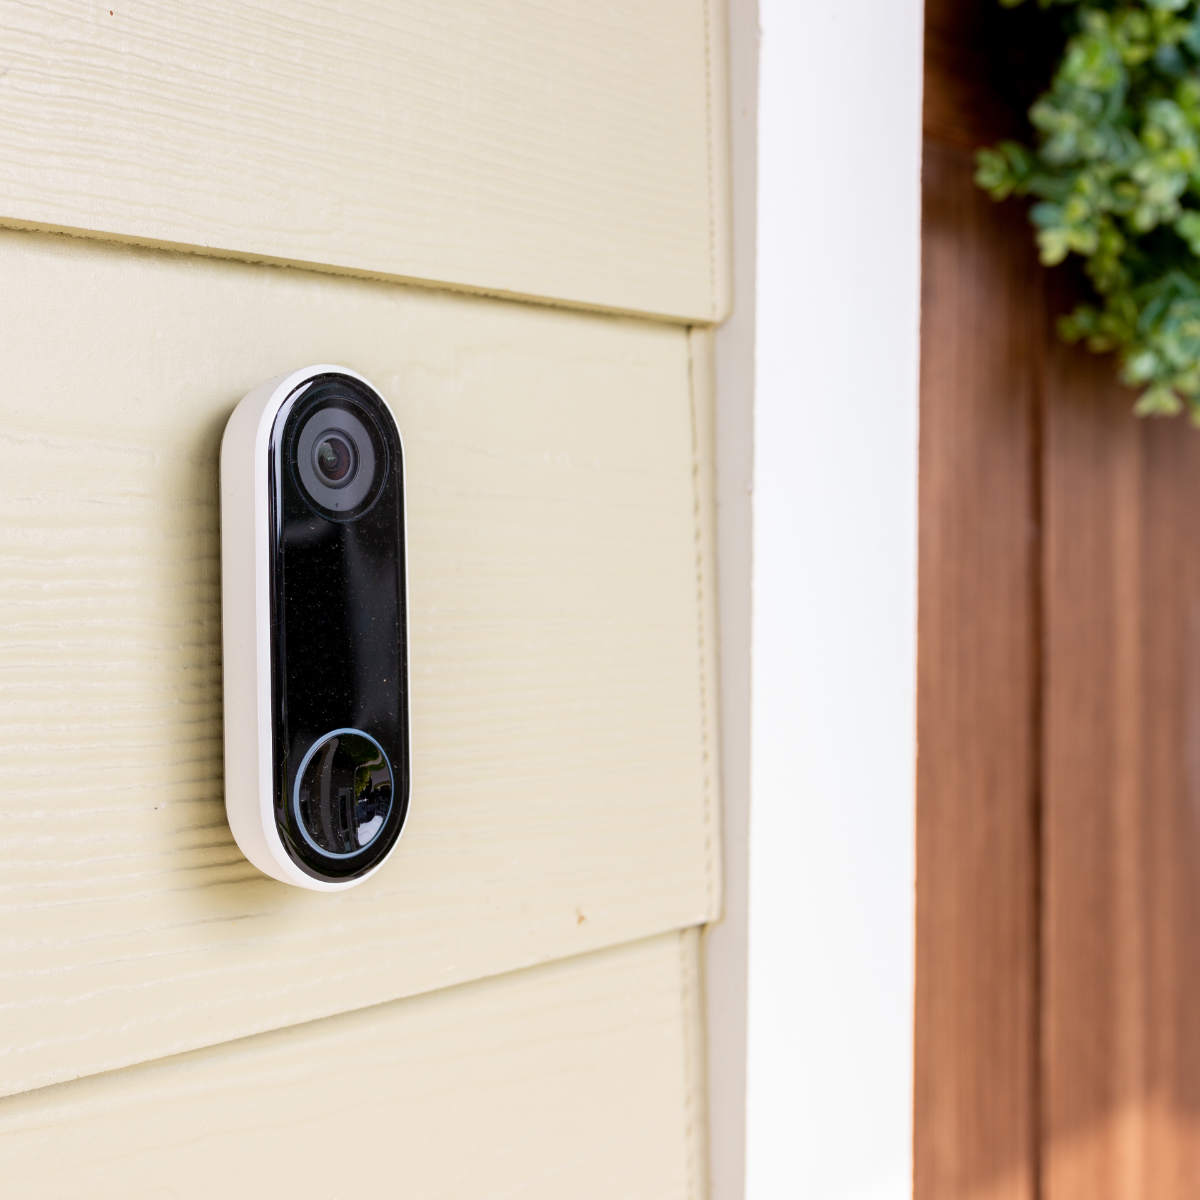 image of video-enabled door bell ringer